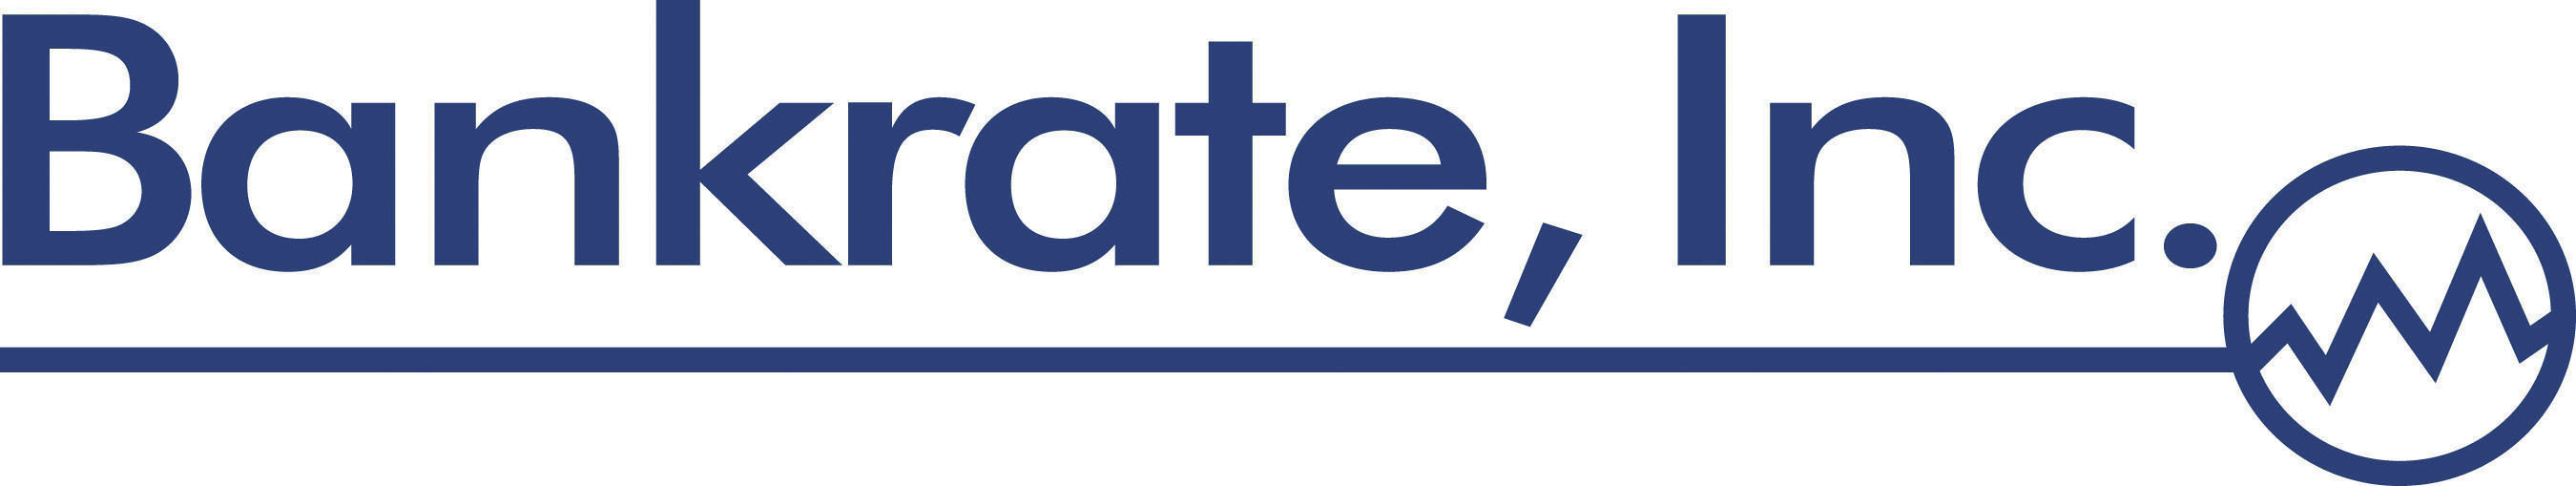 Bankrate Logo photo - 1